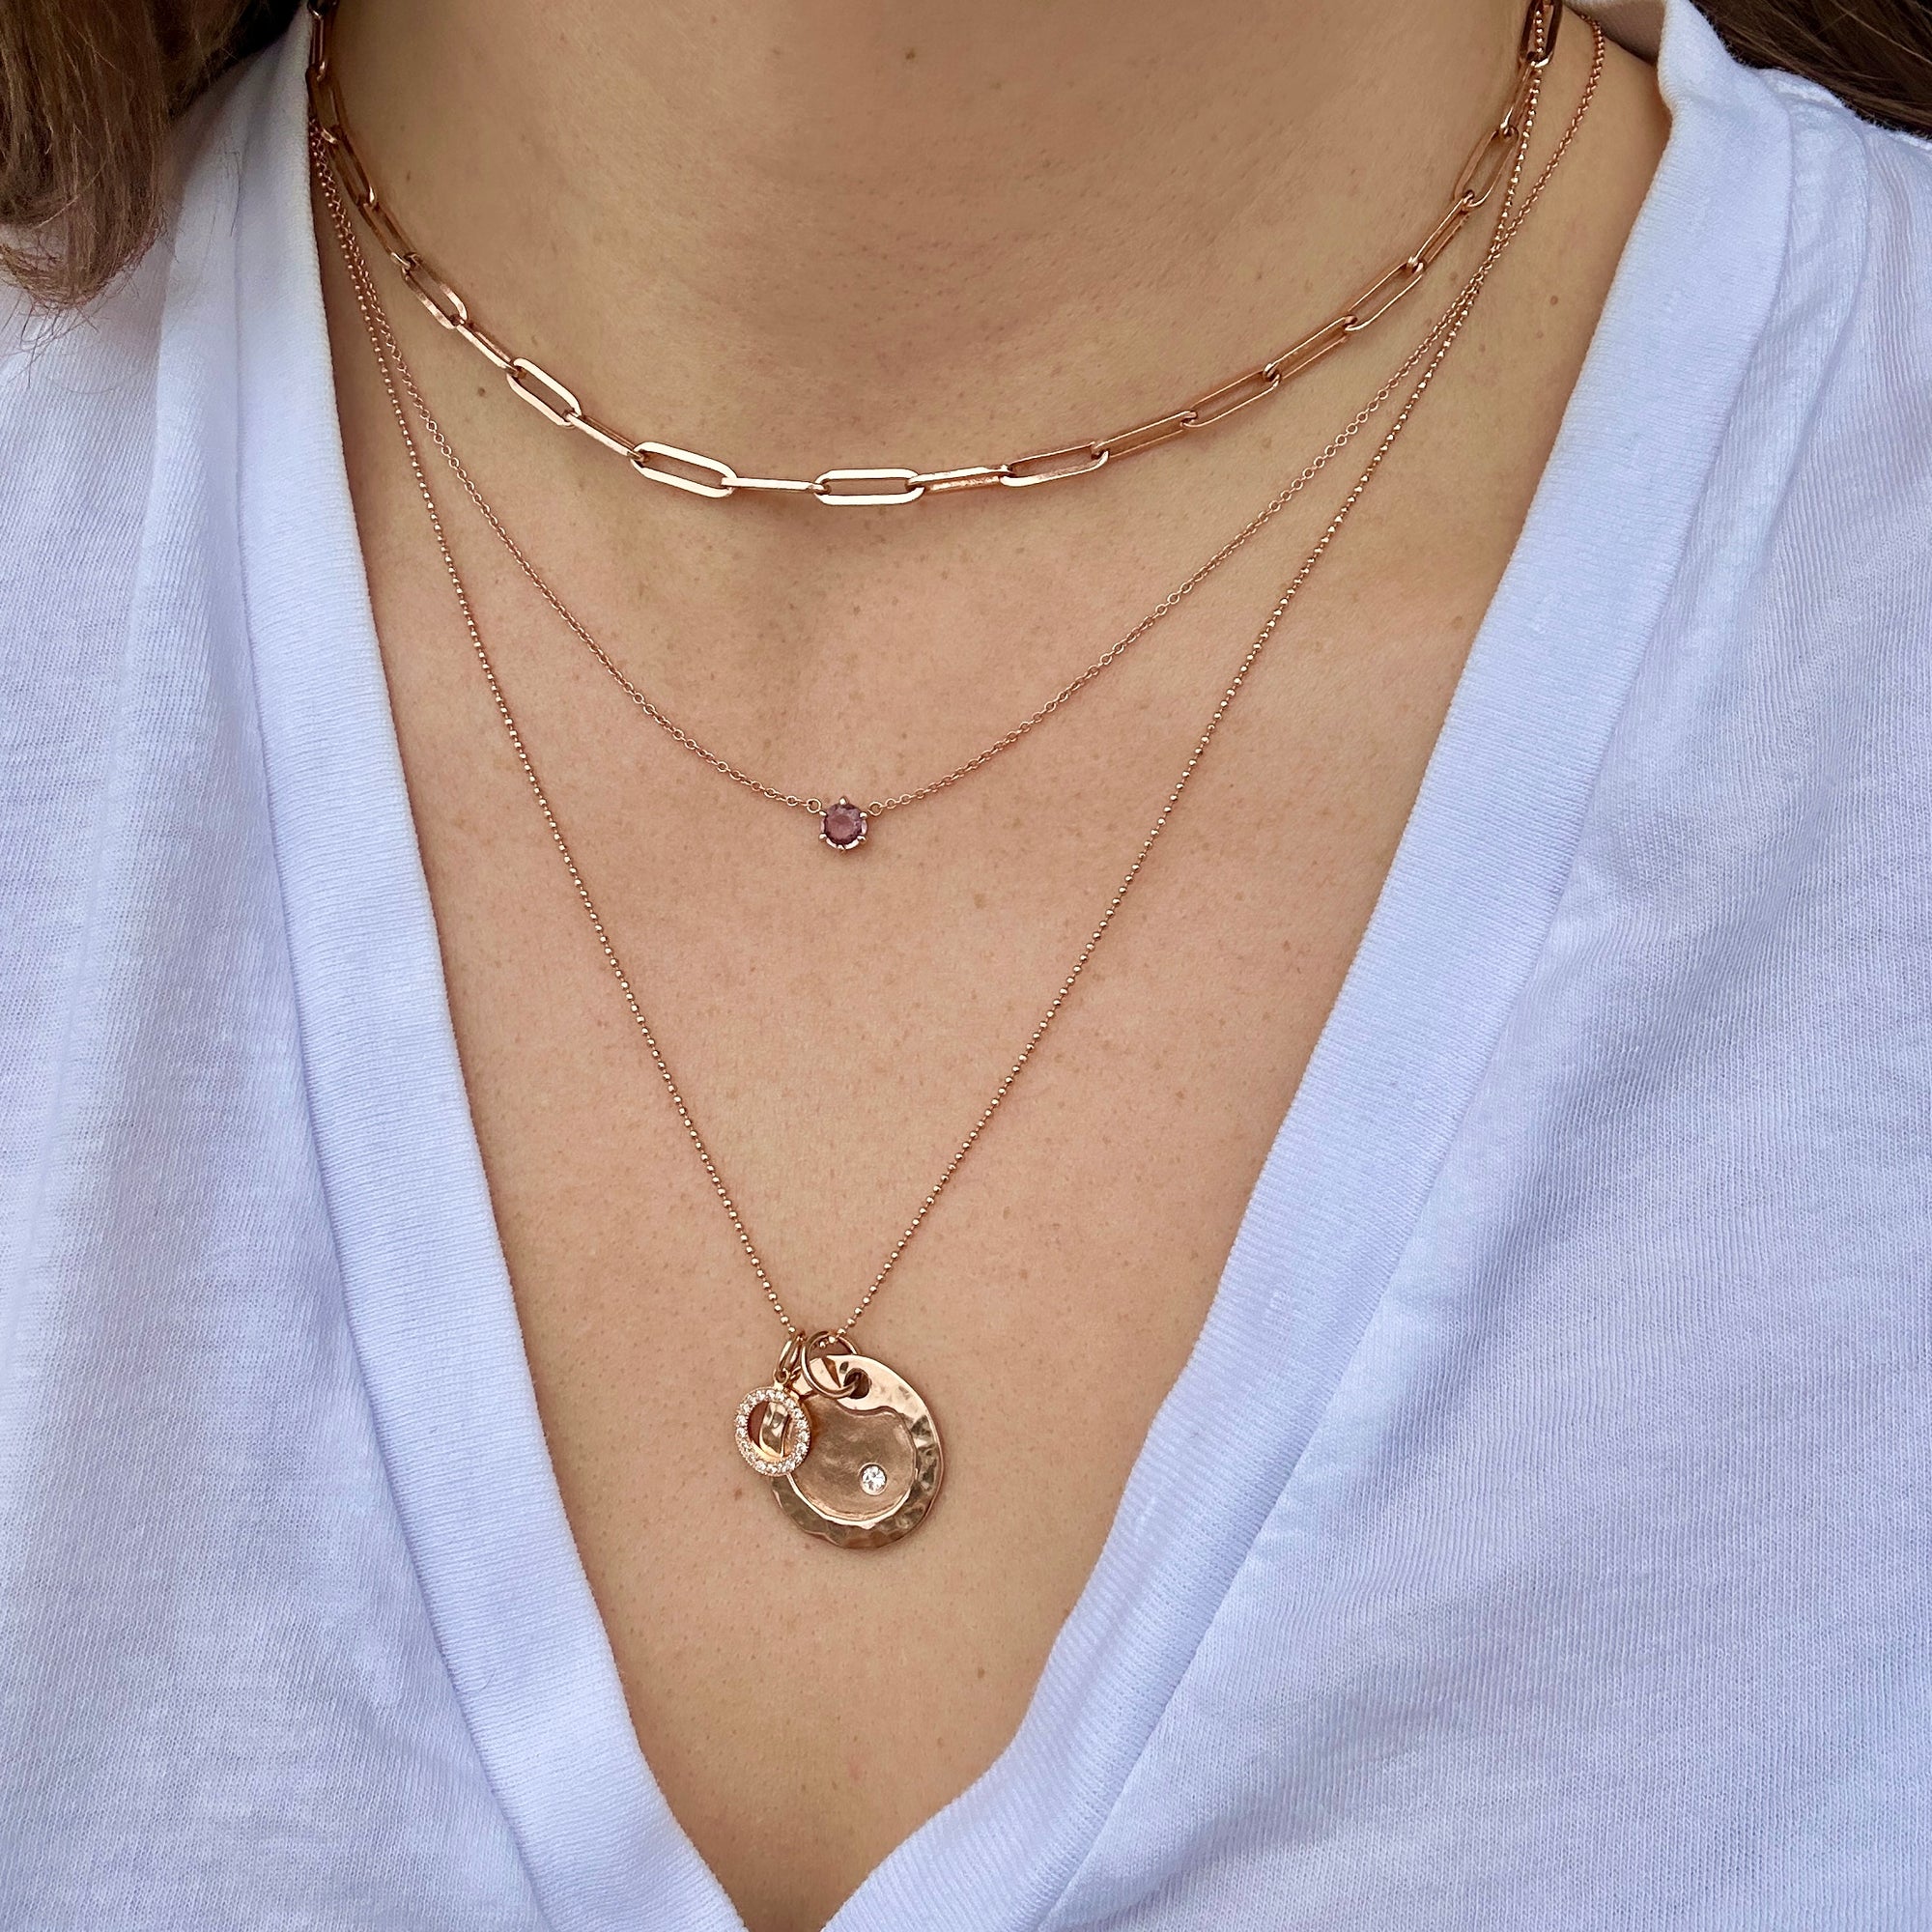 BEZL 14k Rose Gold Sapphire Necklace